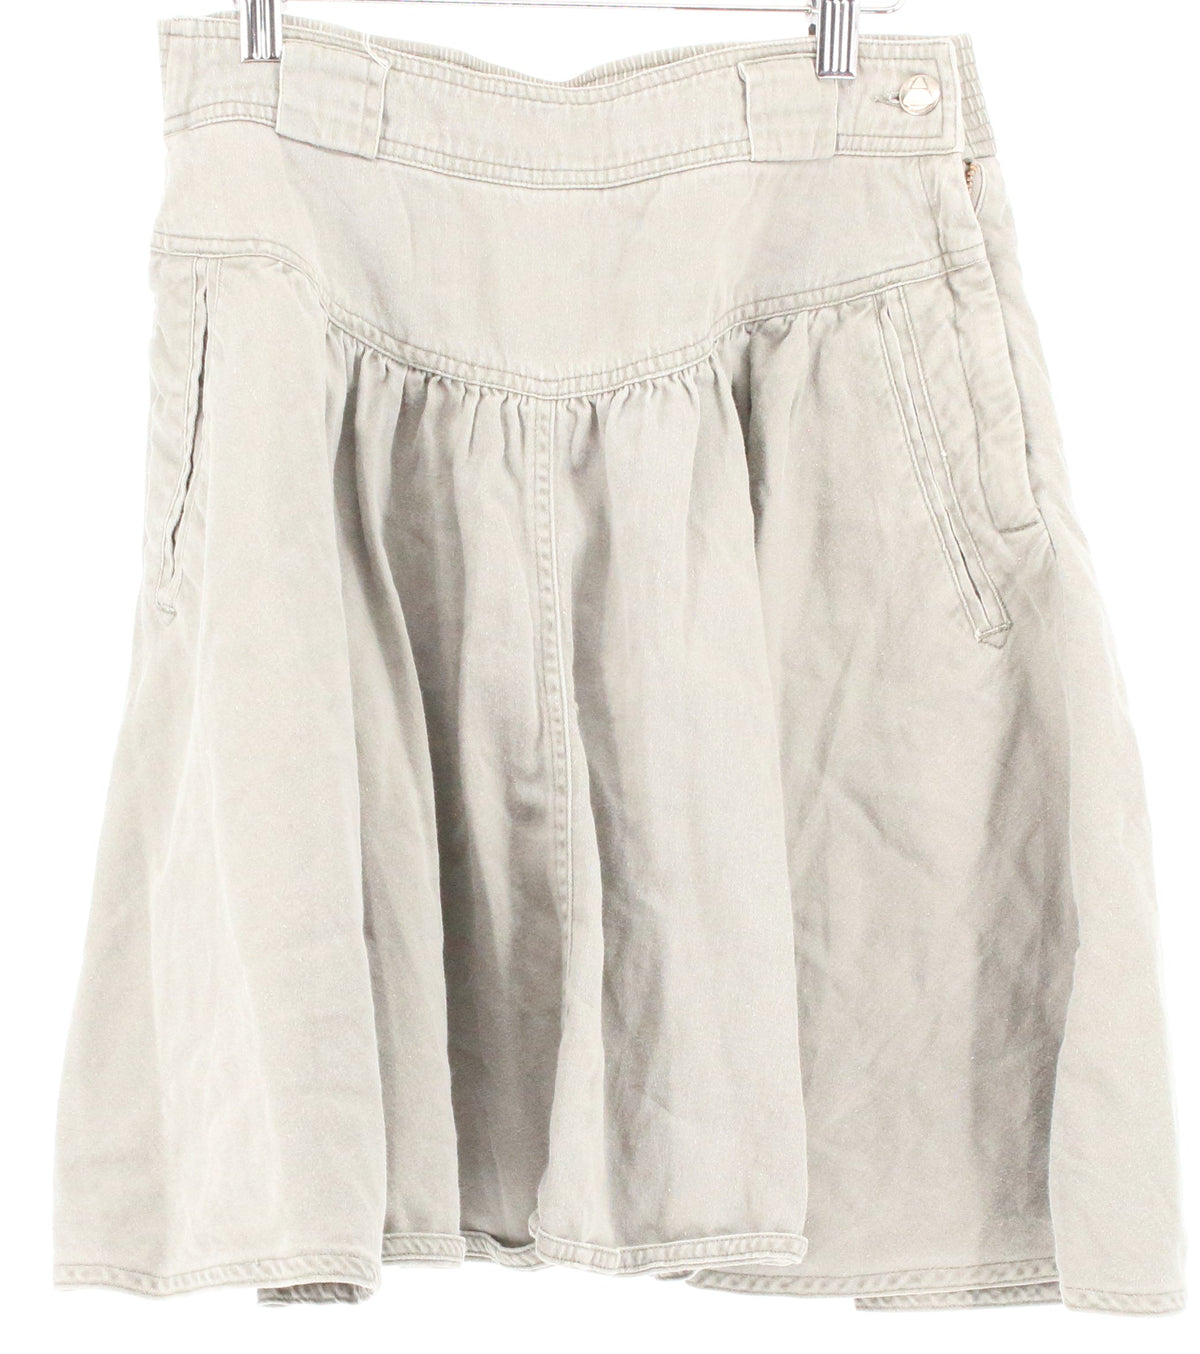 Liz Wear Grey Gathered Pleated Cotton Skirt With Pockets